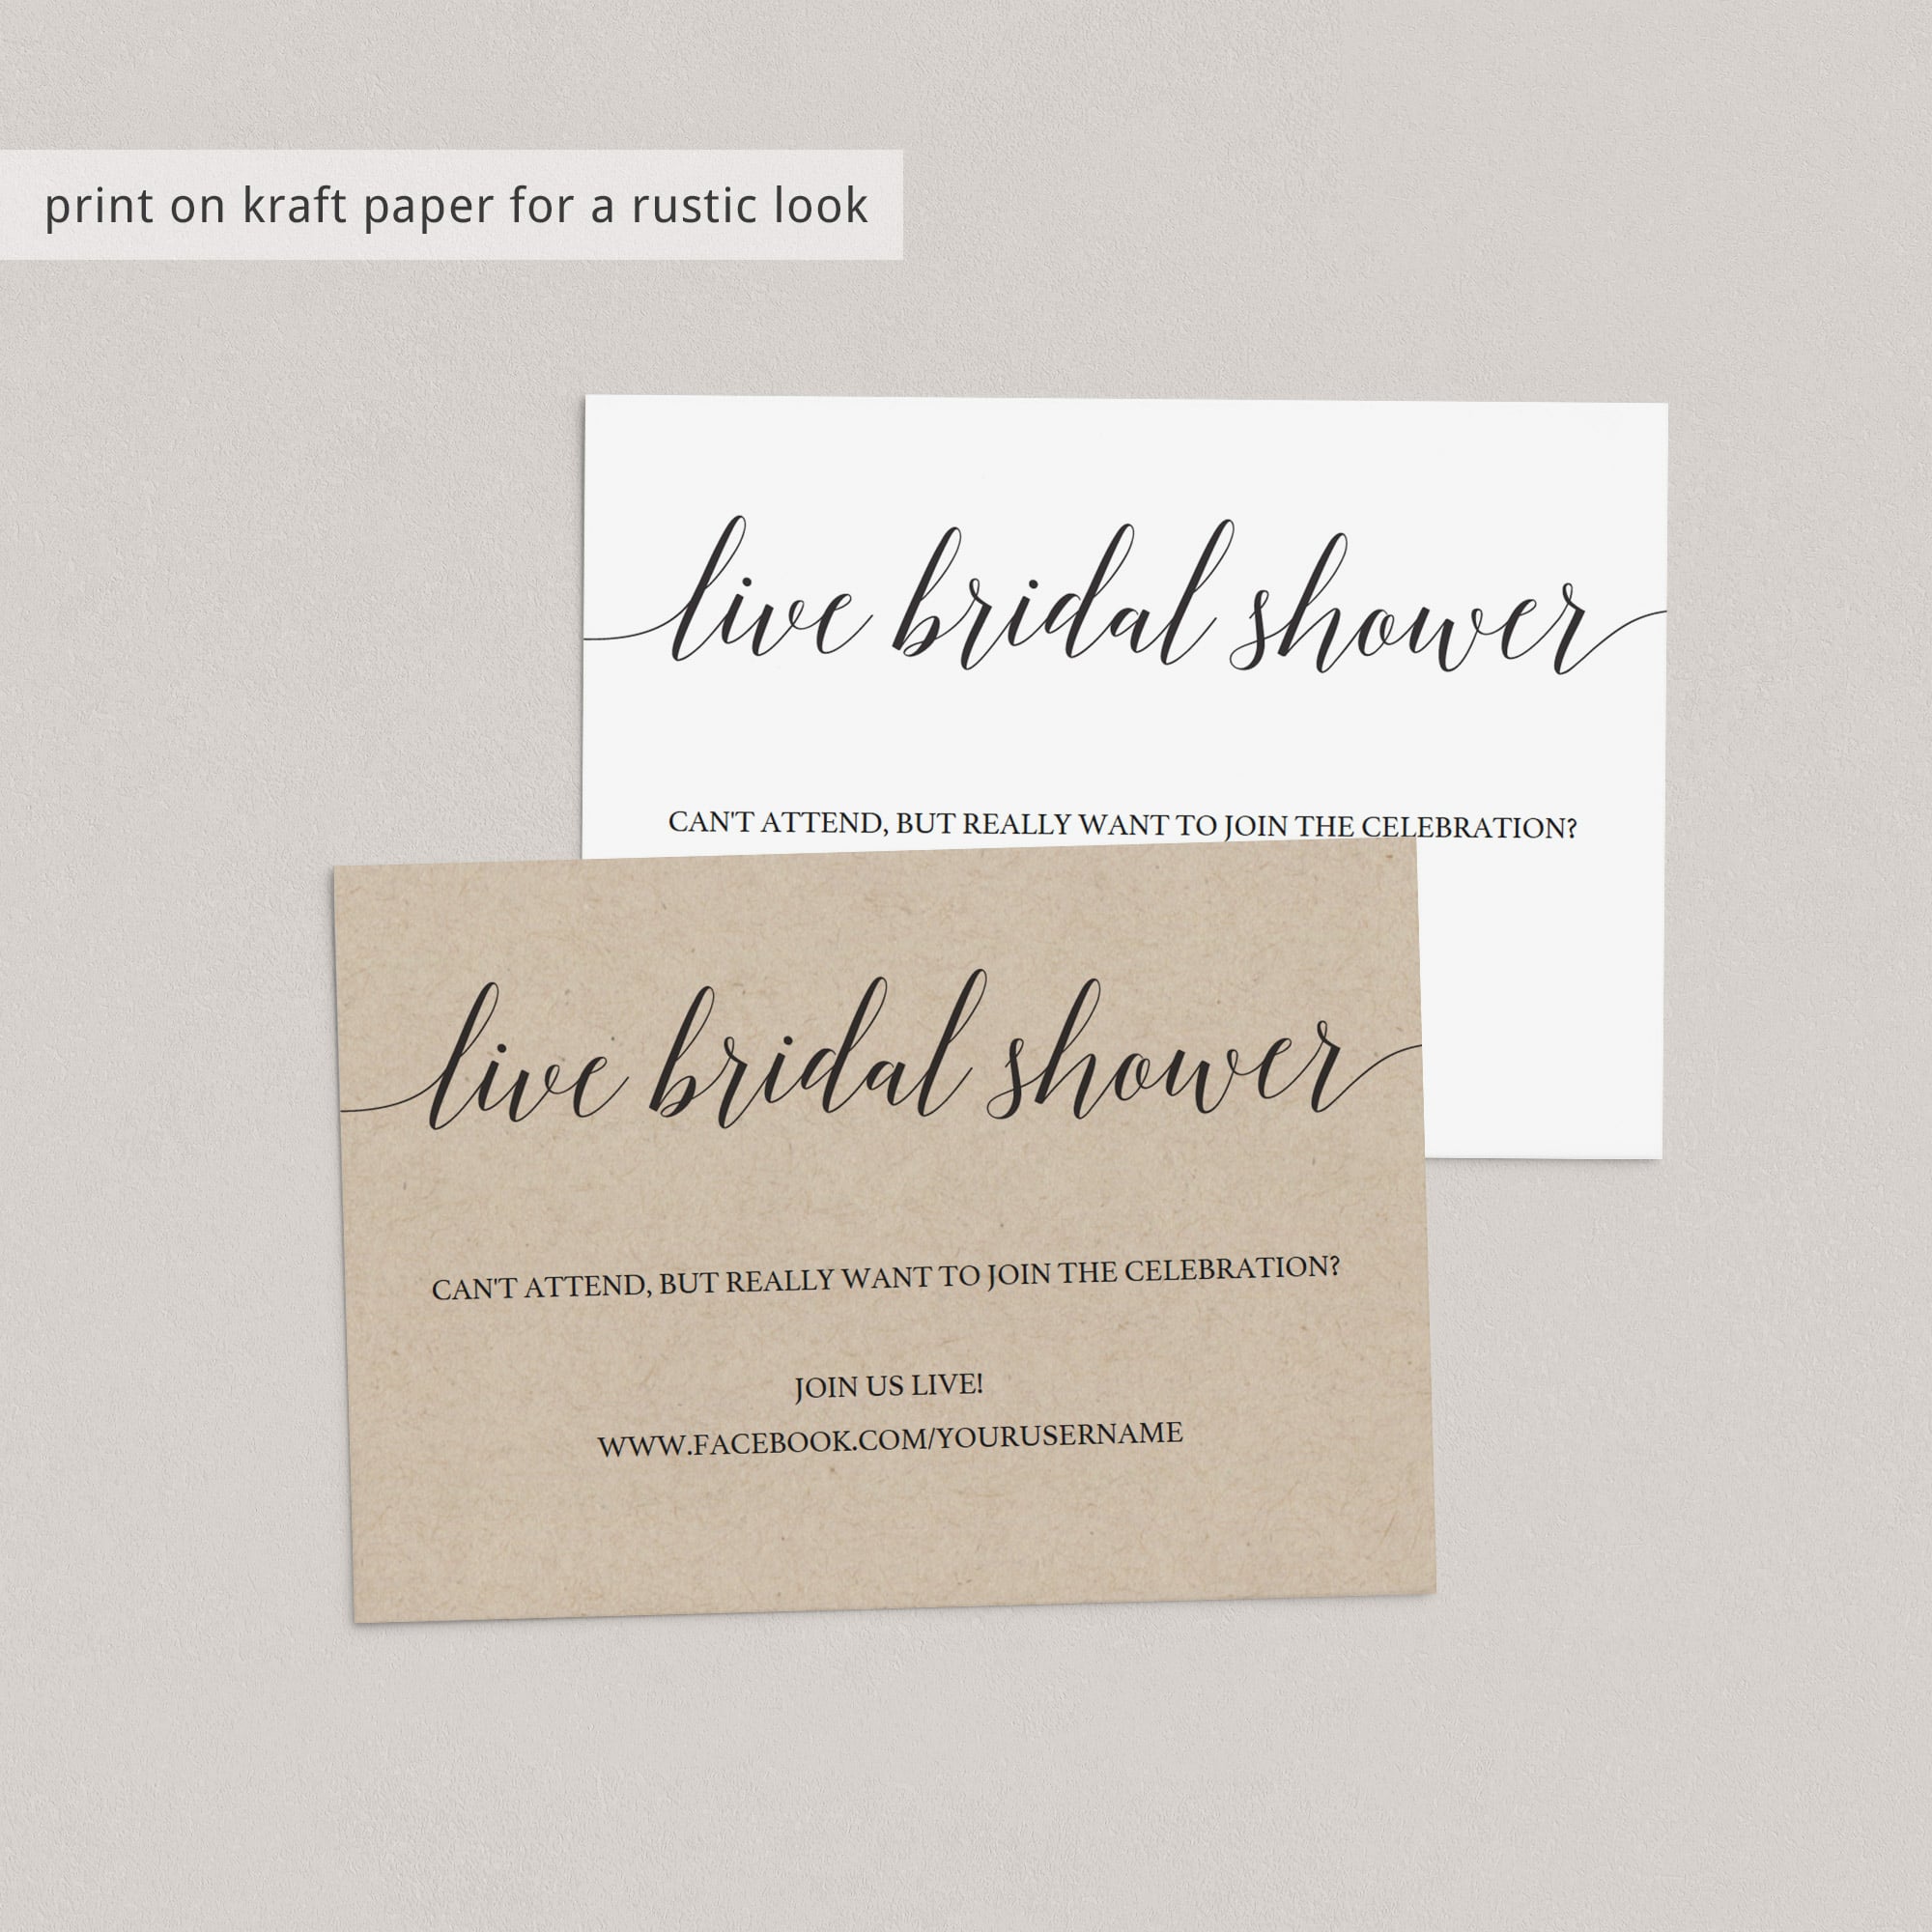 Live bridal shower invitation enclosure cards by LittleSizzle